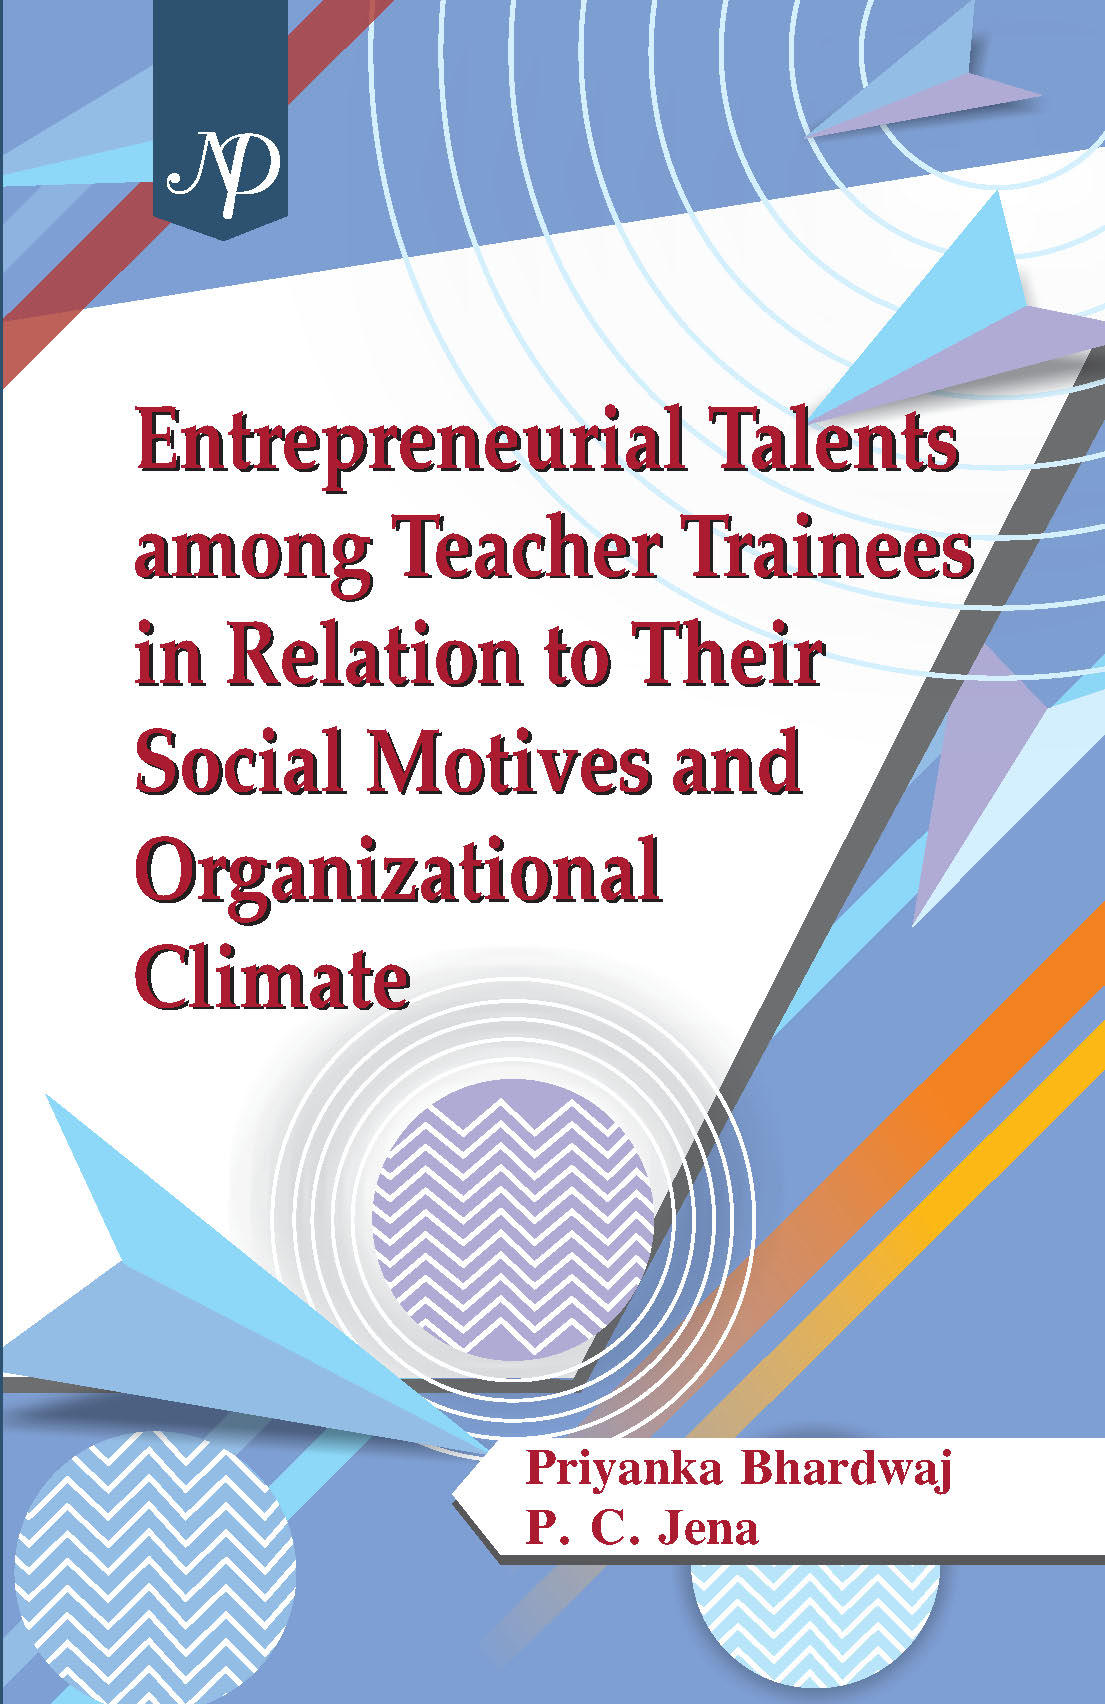 Entrepreneurial Talents among Teachers in Relation Cover.jpg